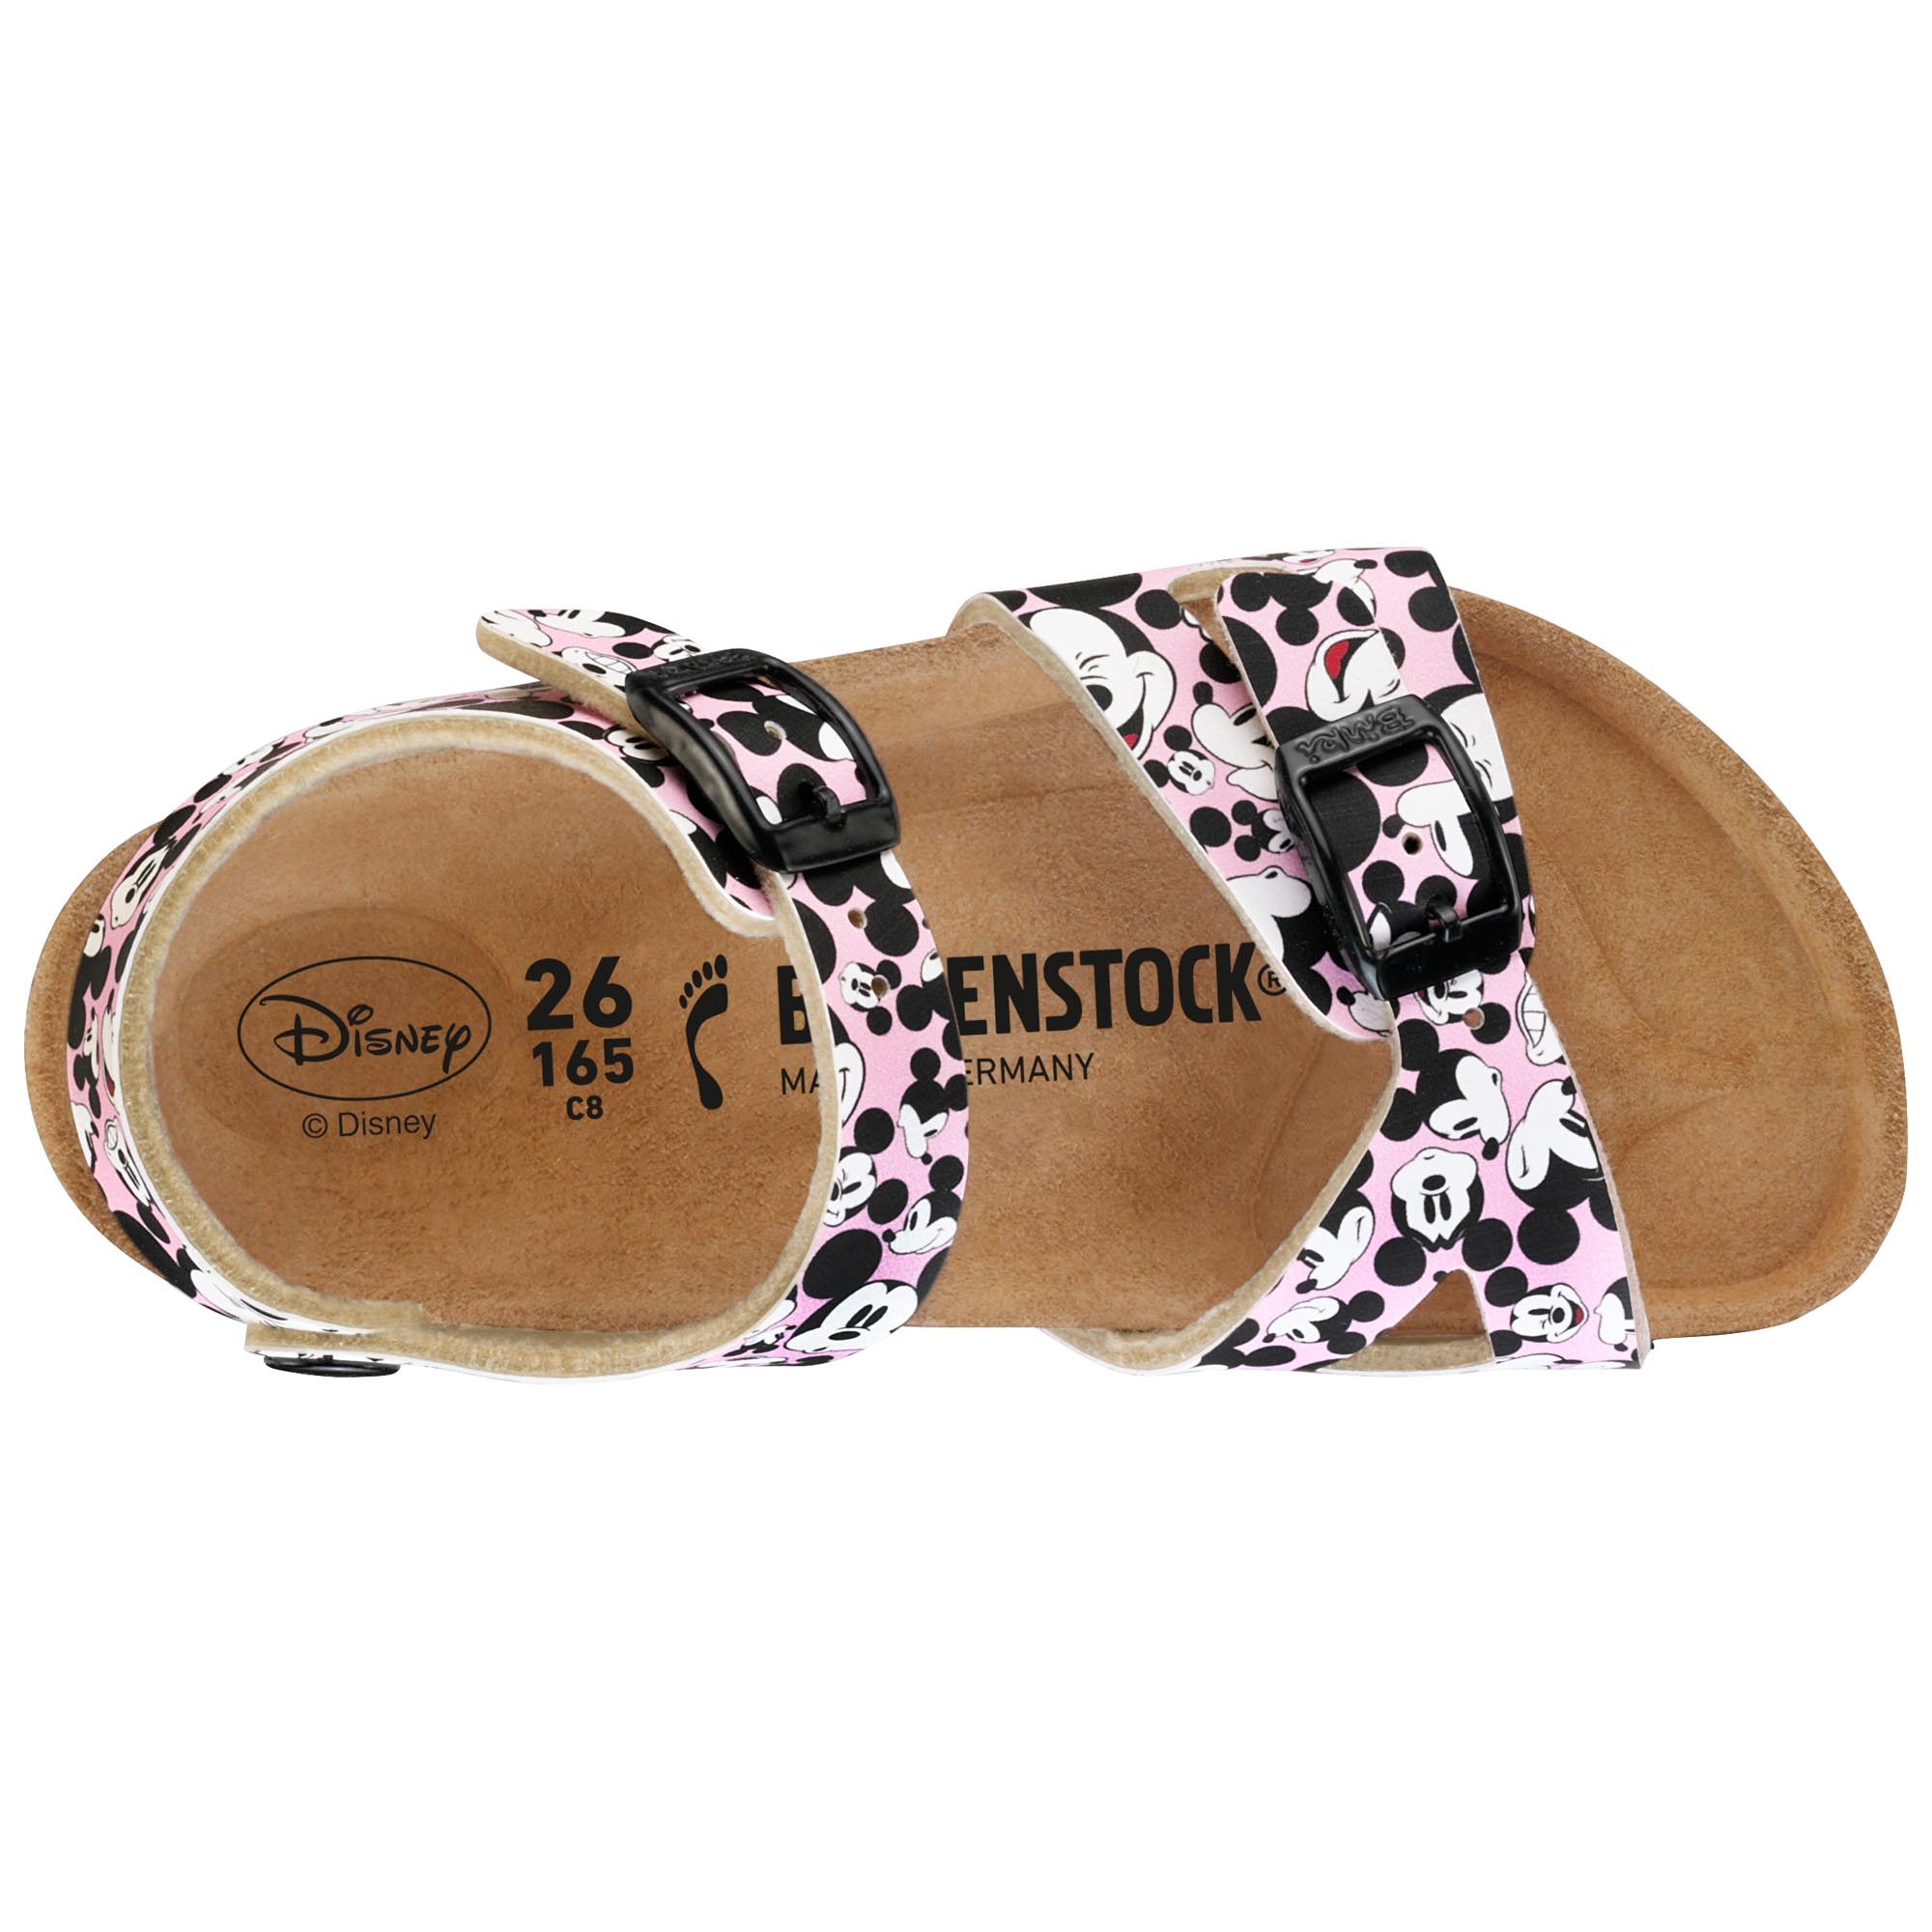 birkenstock mickey mouse sandals